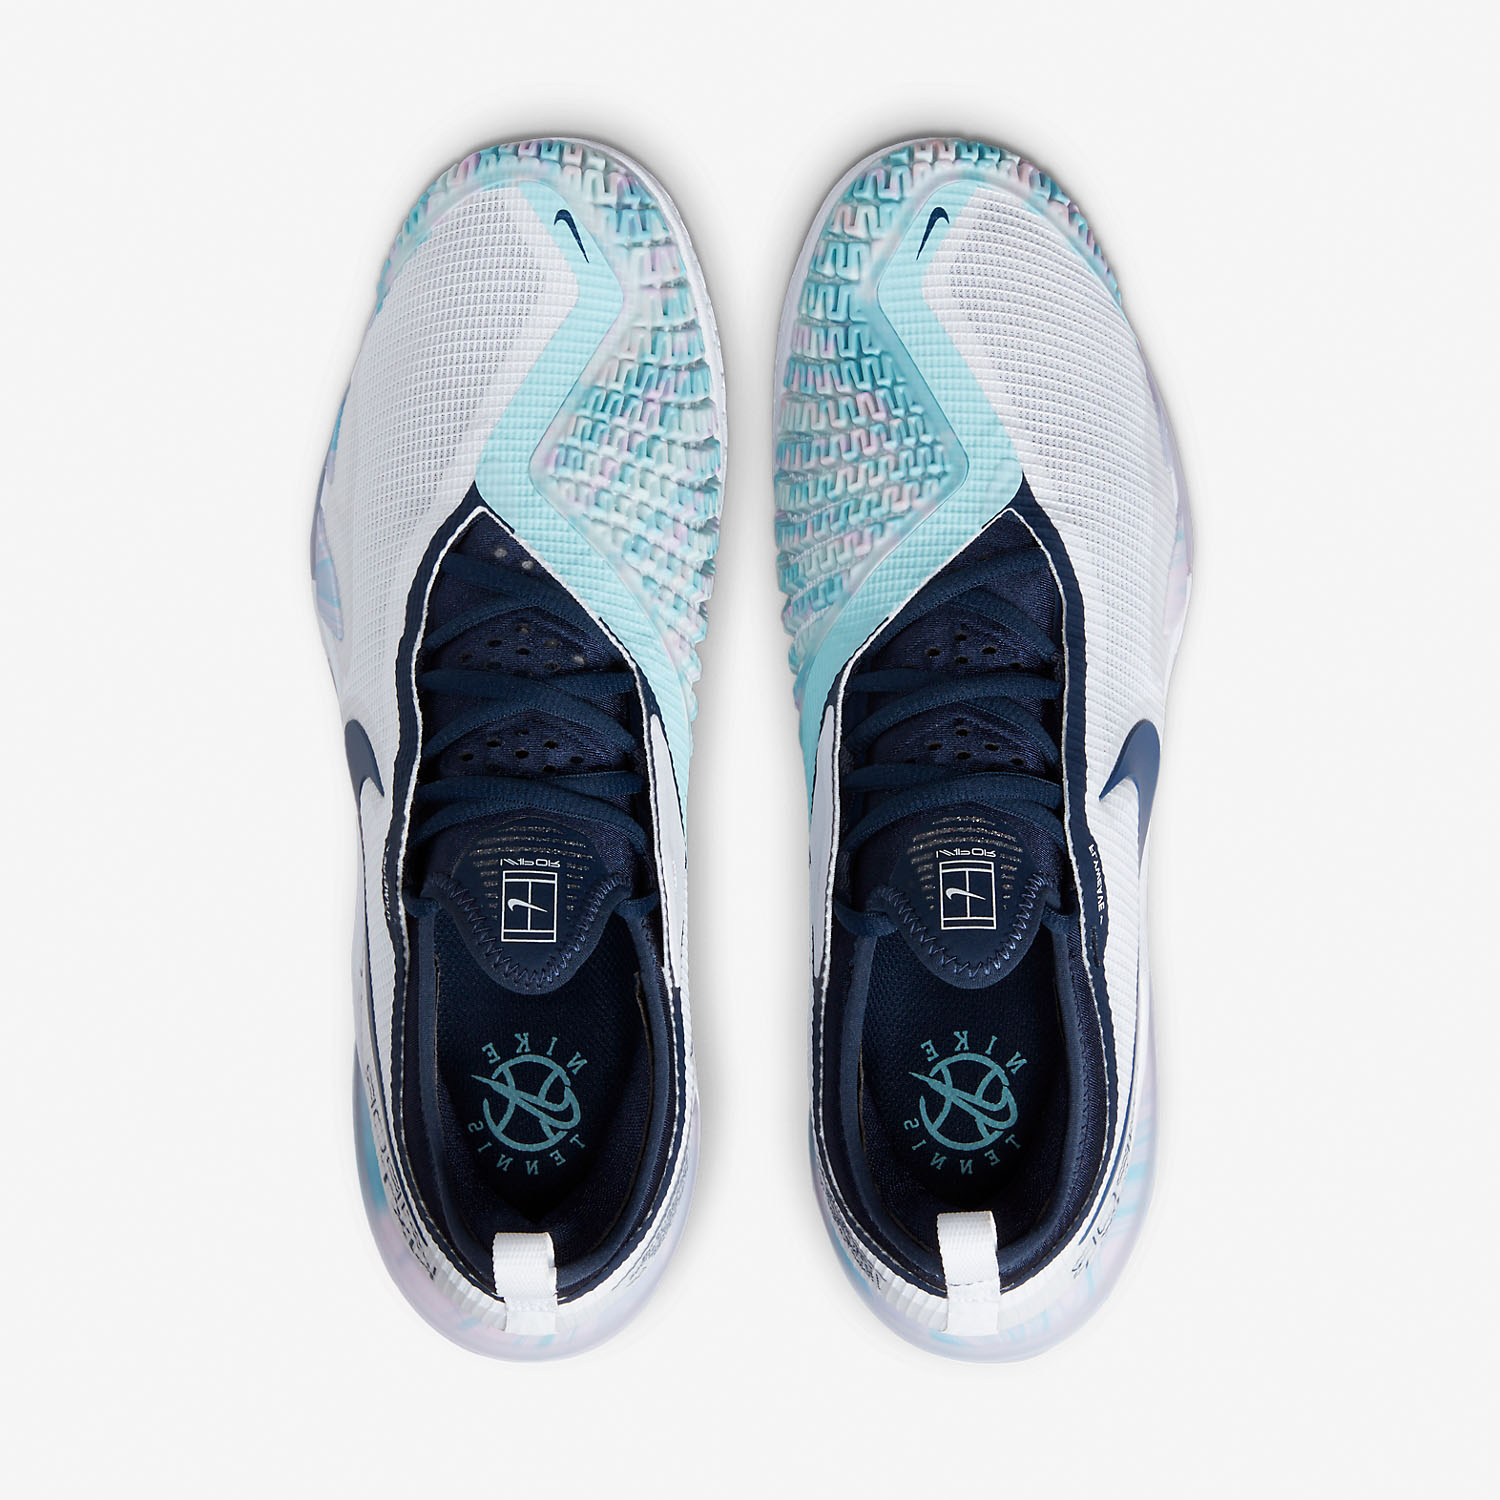 Nike Court React Vapor NXT Men's Tennis Shoes - White/Navy